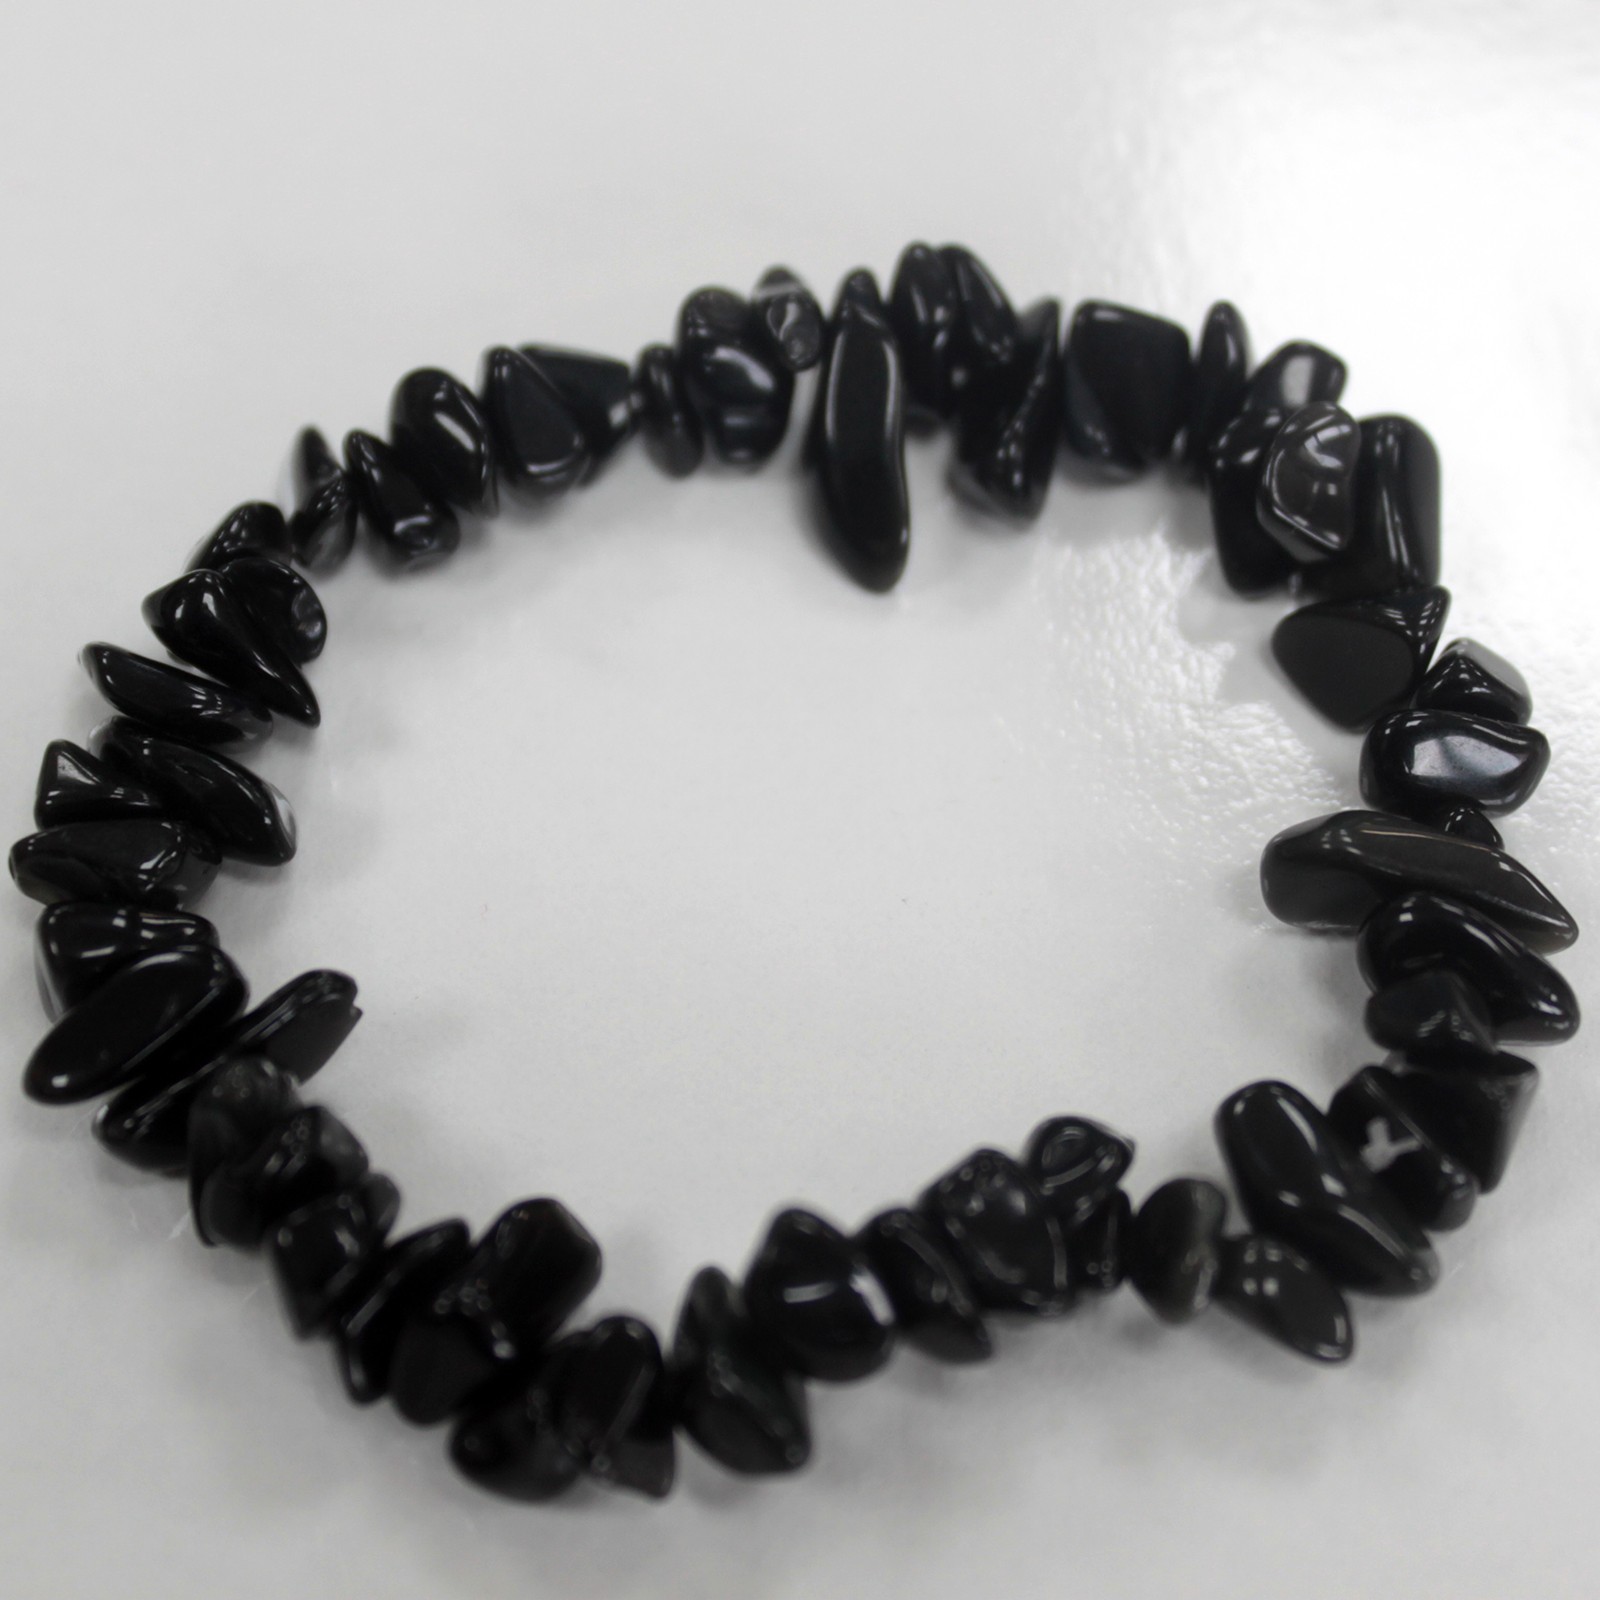 3 x Chipstone Bracelets - Black Agate